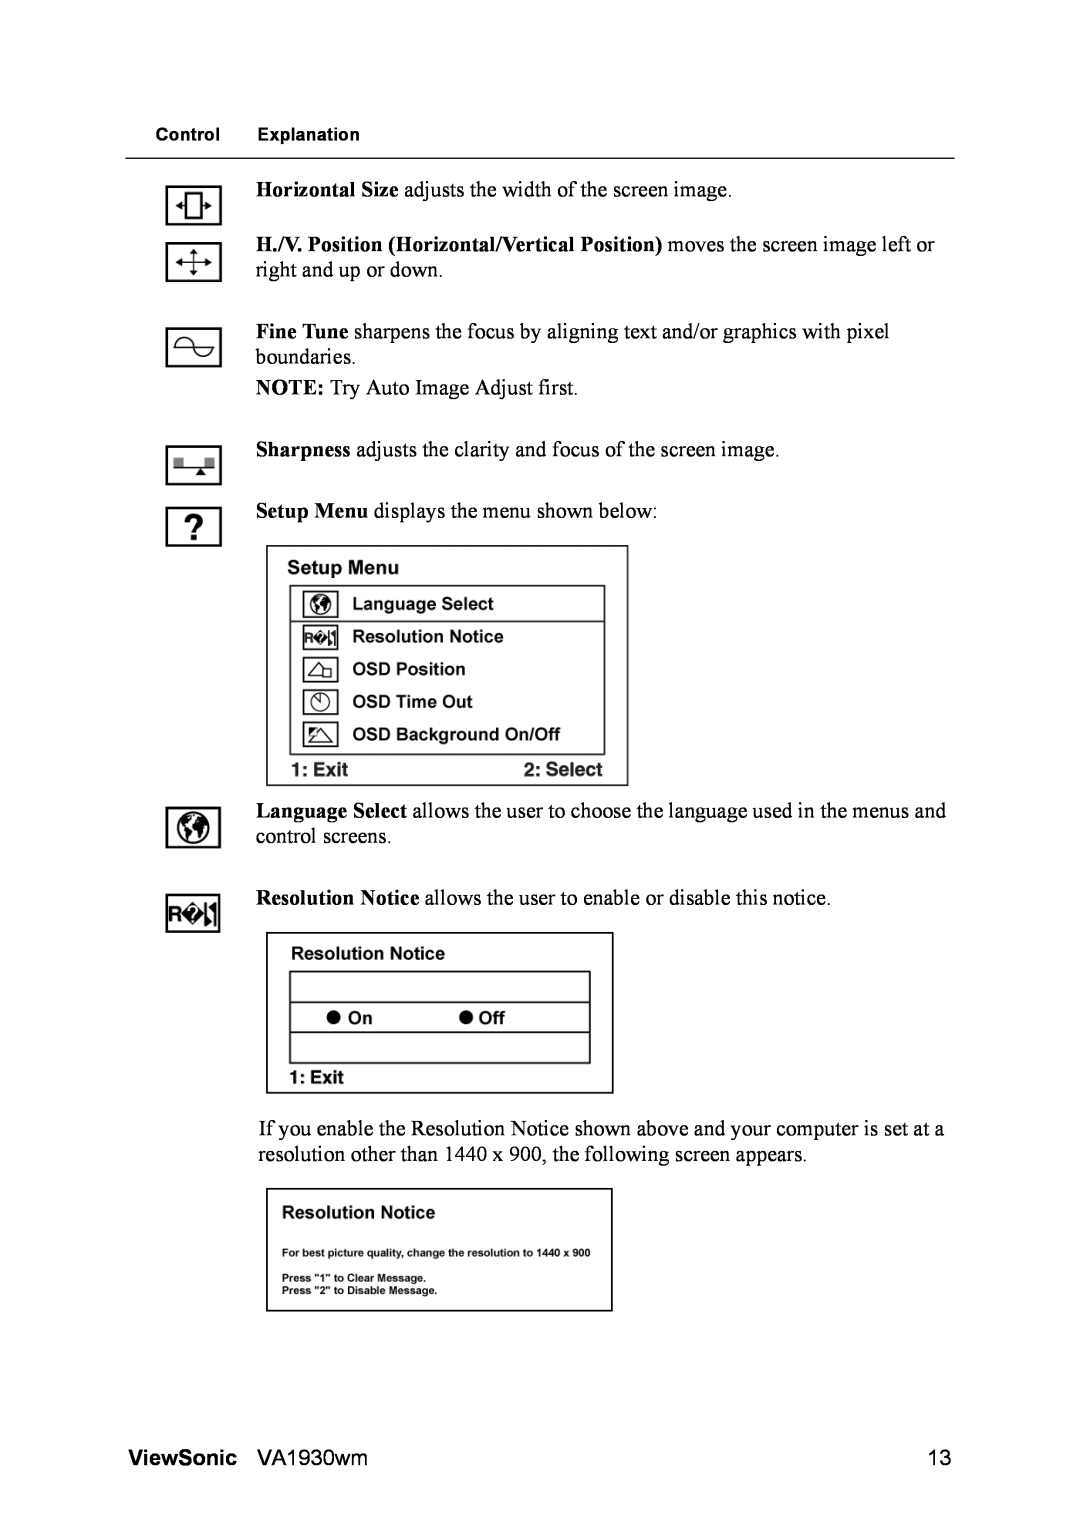 ViewSonic VS11419 manual NOTE: Try Auto Image Adjust first, ViewSonic VA1930wm 